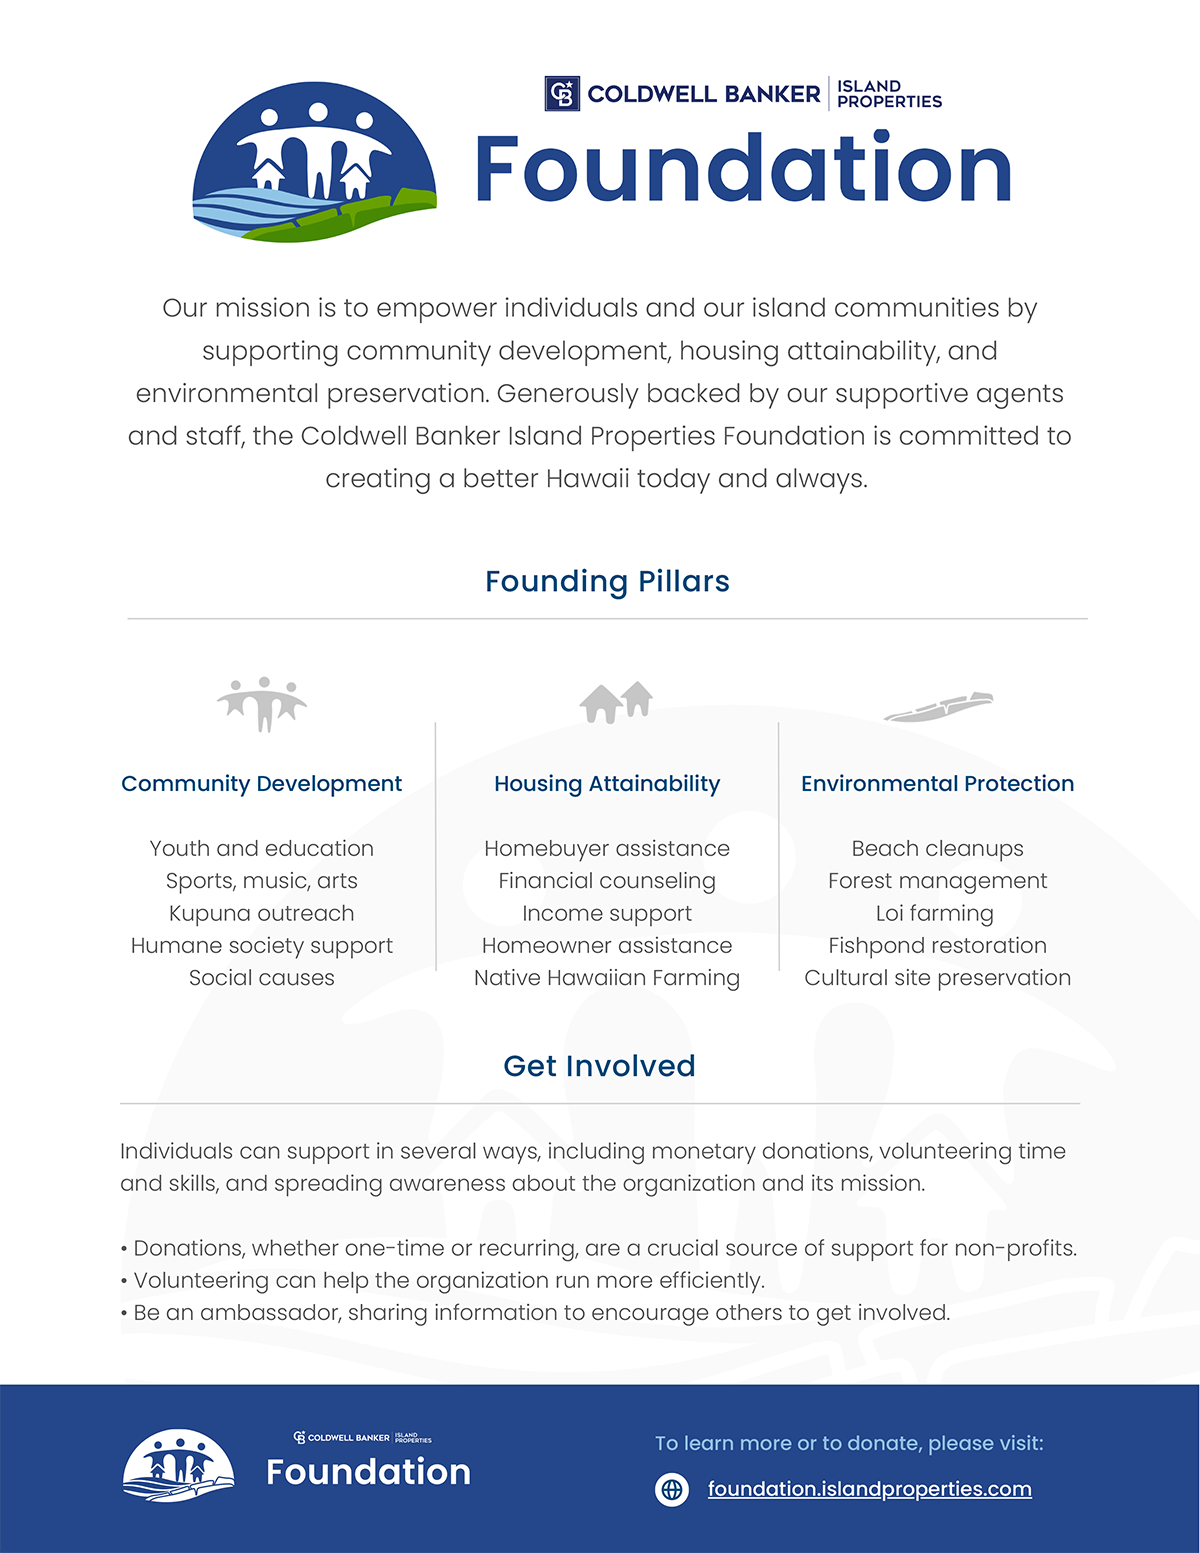 CBIP Foundation